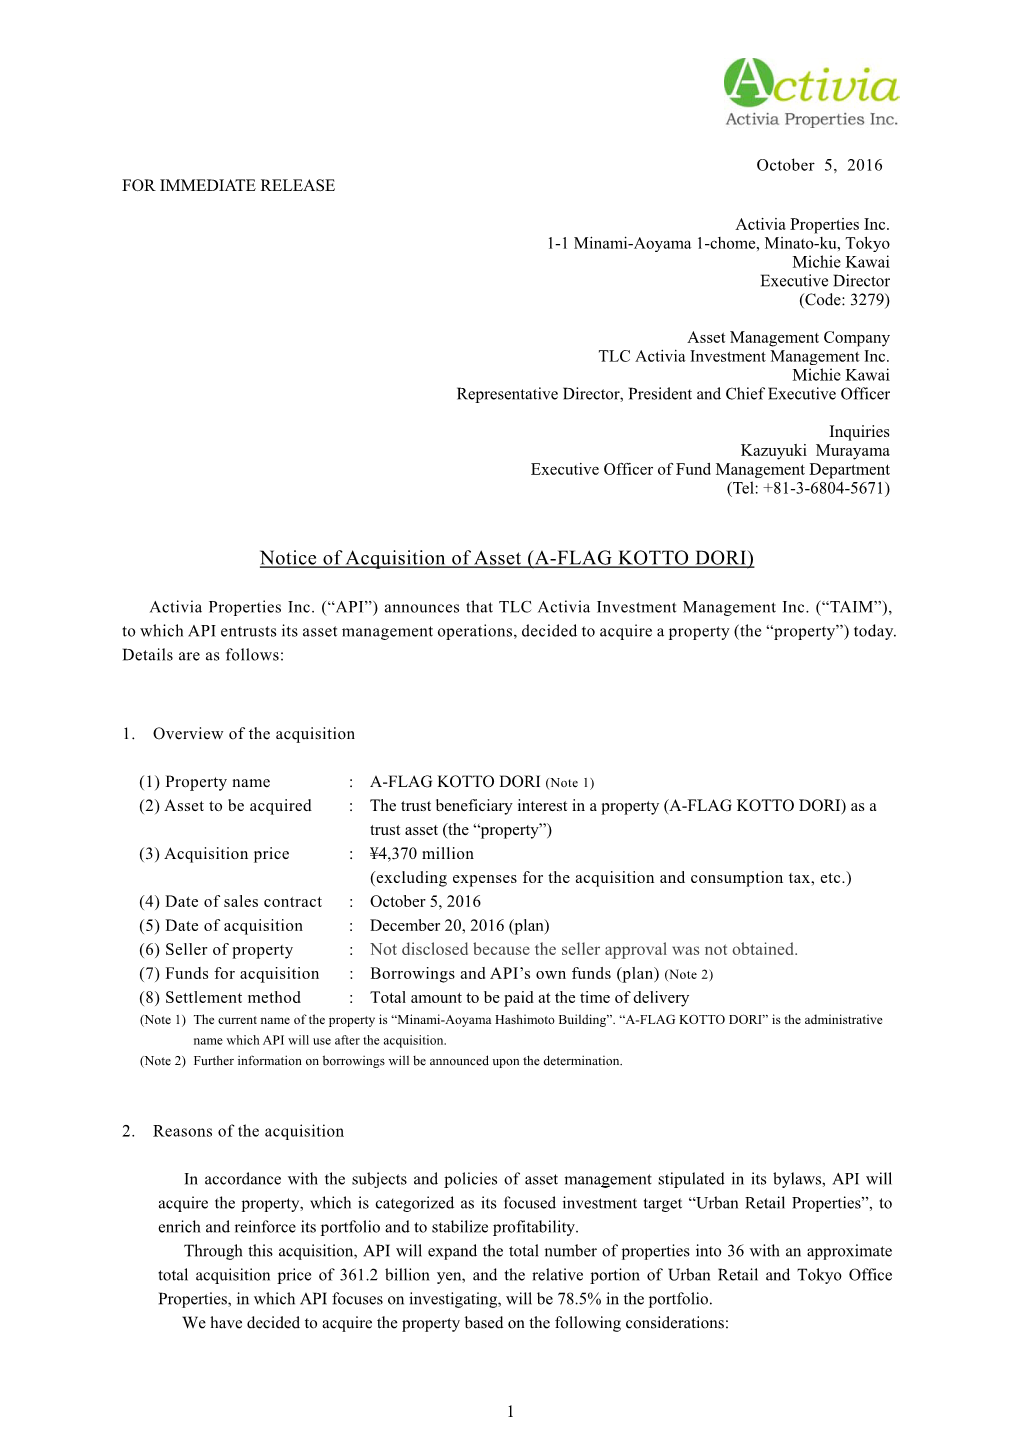 Notice of Acquisition of Asset (A-FLAG KOTTO DORI)